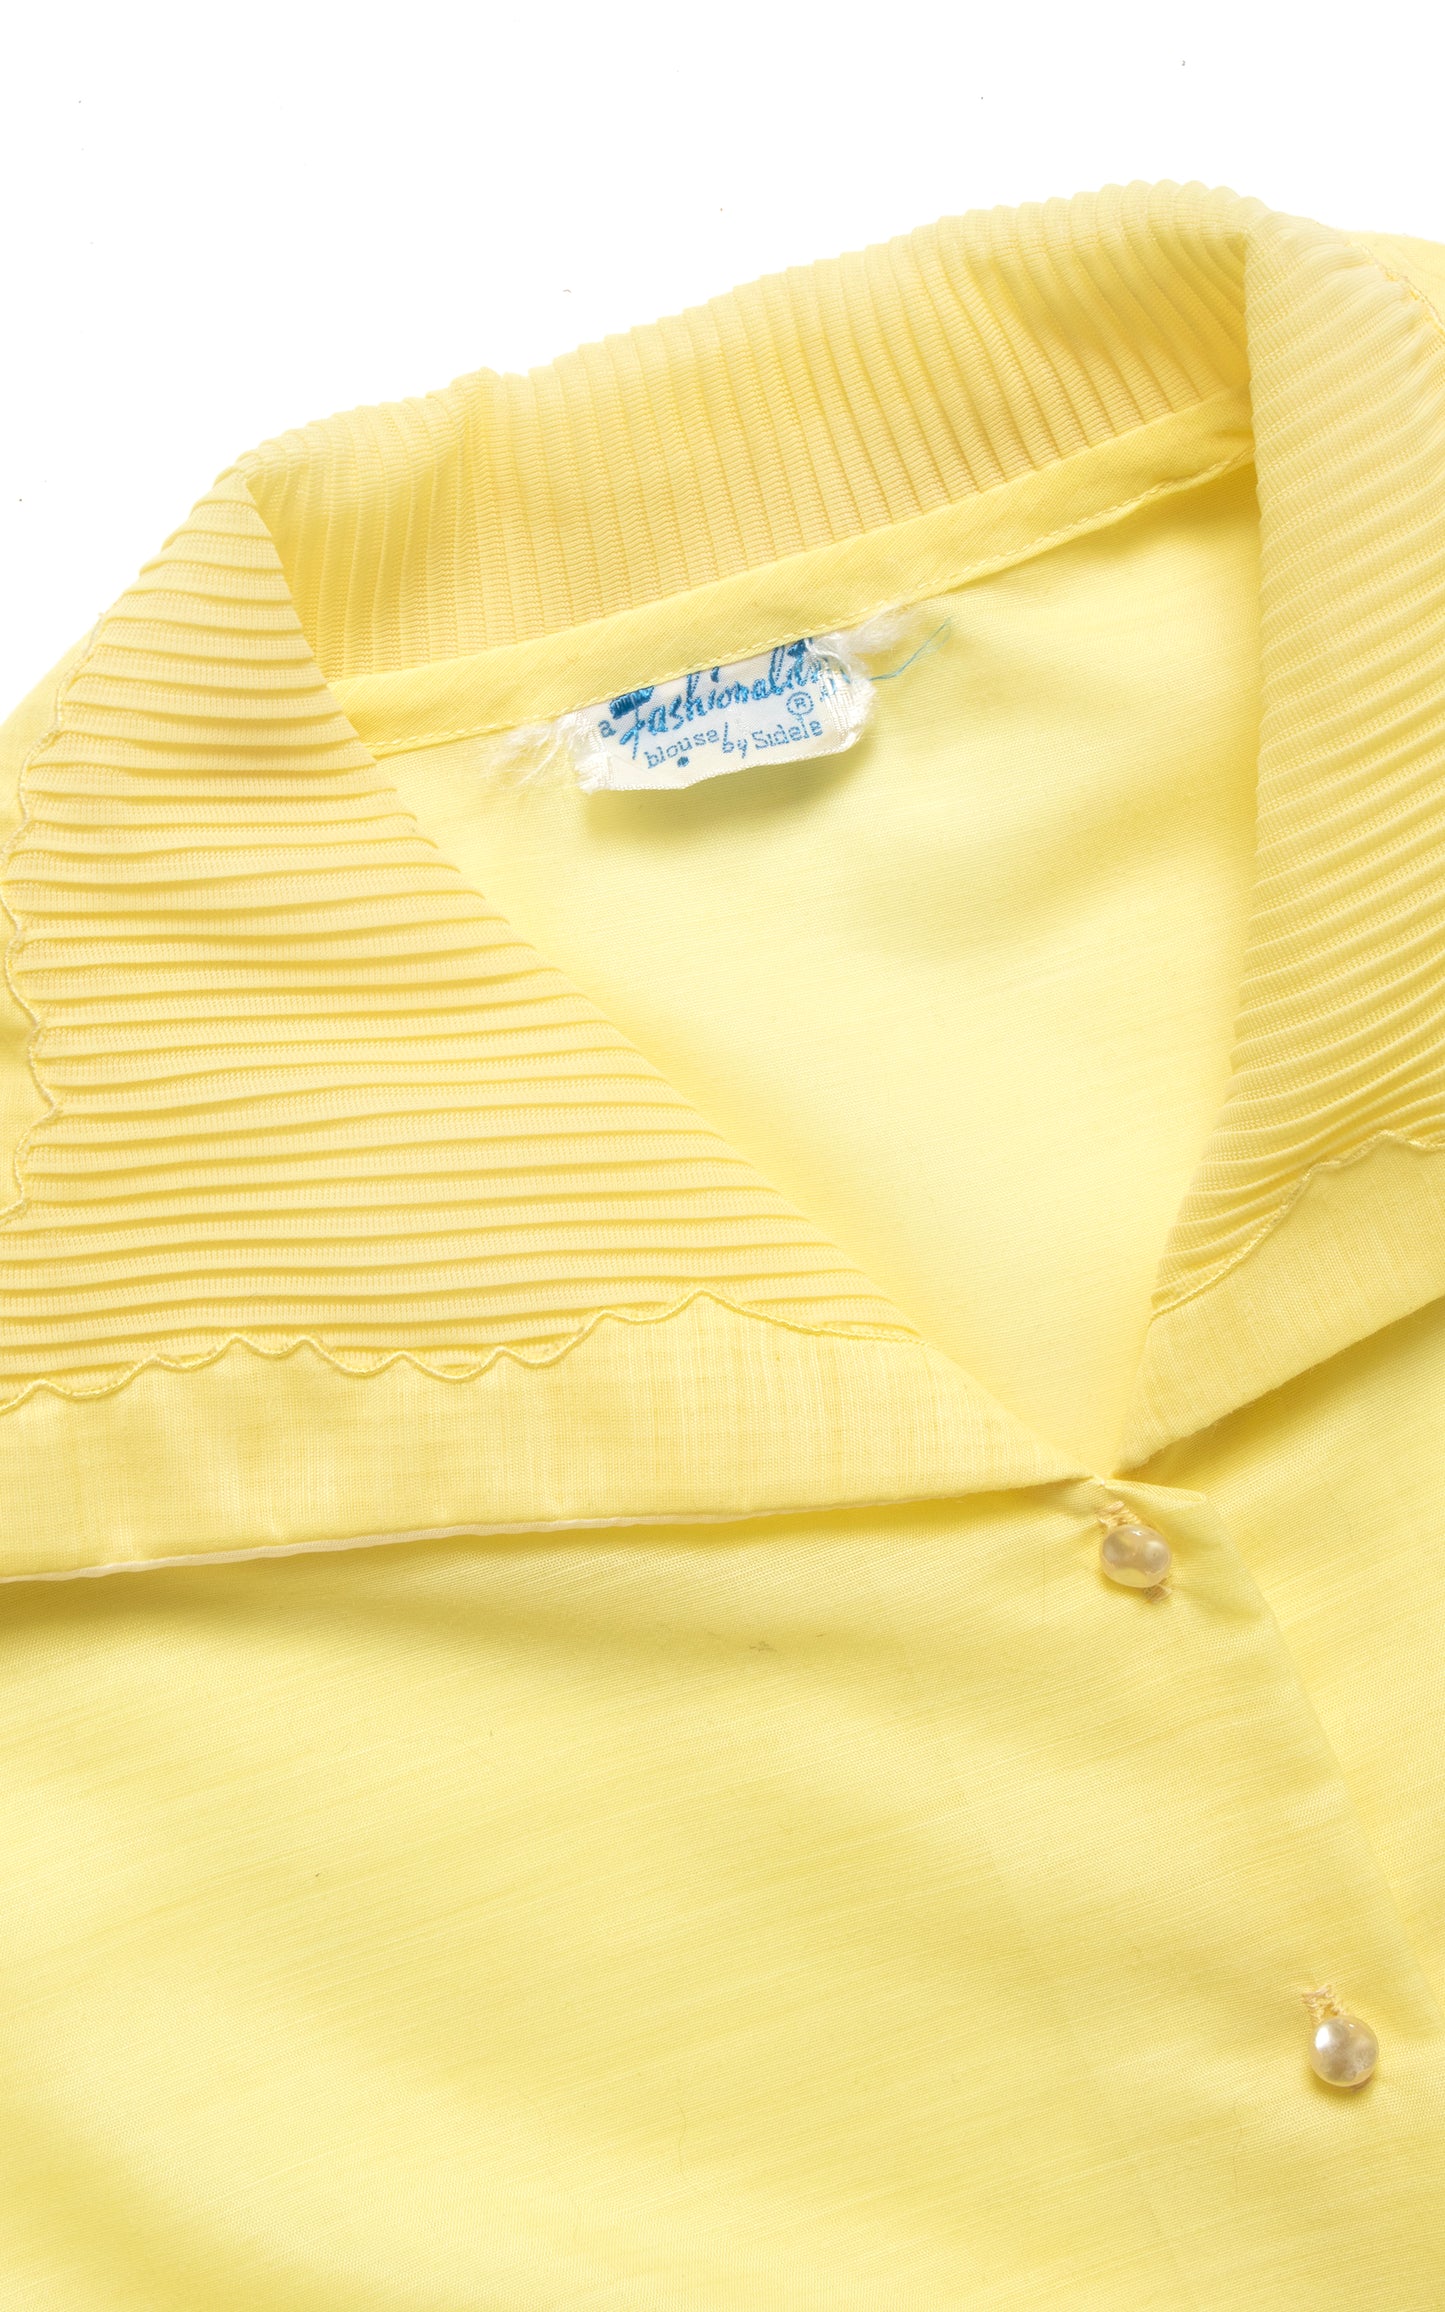 1960s Pastel Yellow Sleeveless Blouse | x-large